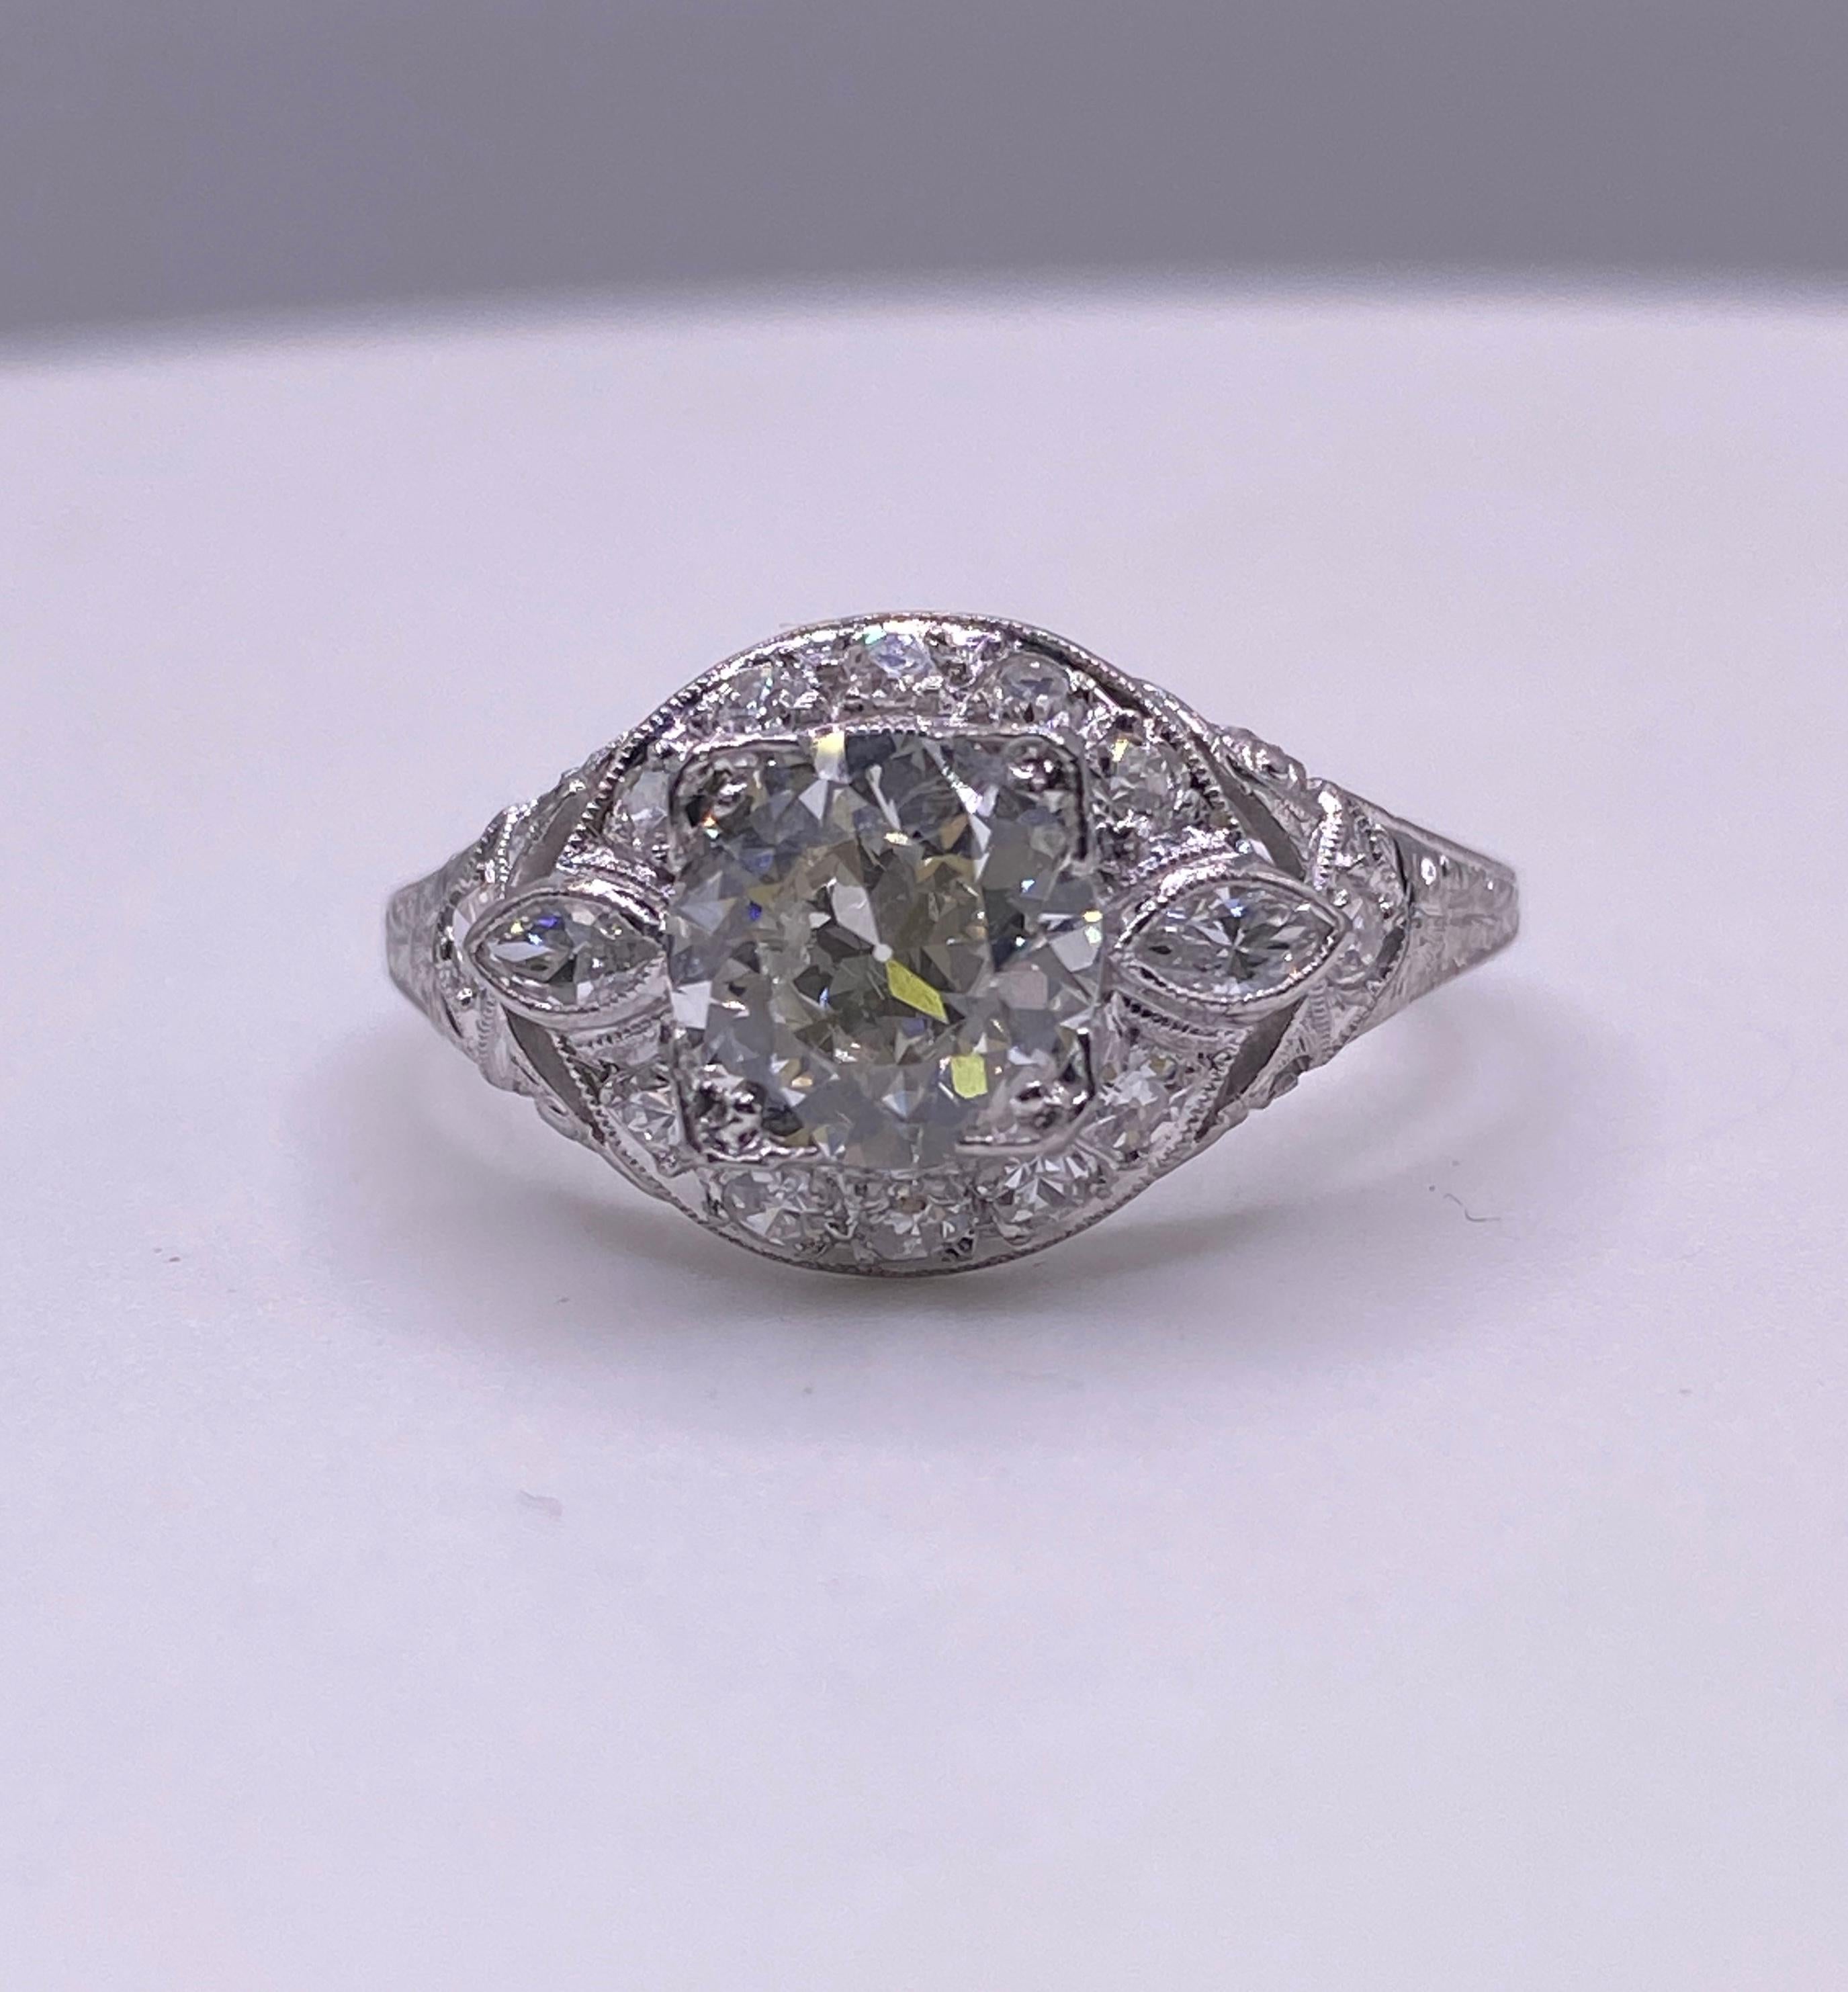 900 Platinum engagement ring with 1.19 carat J/Vs1 Old European Cut center diamond and 10=.4 carat total weight setting diamonds. RAP $5088. Size 7.75 US